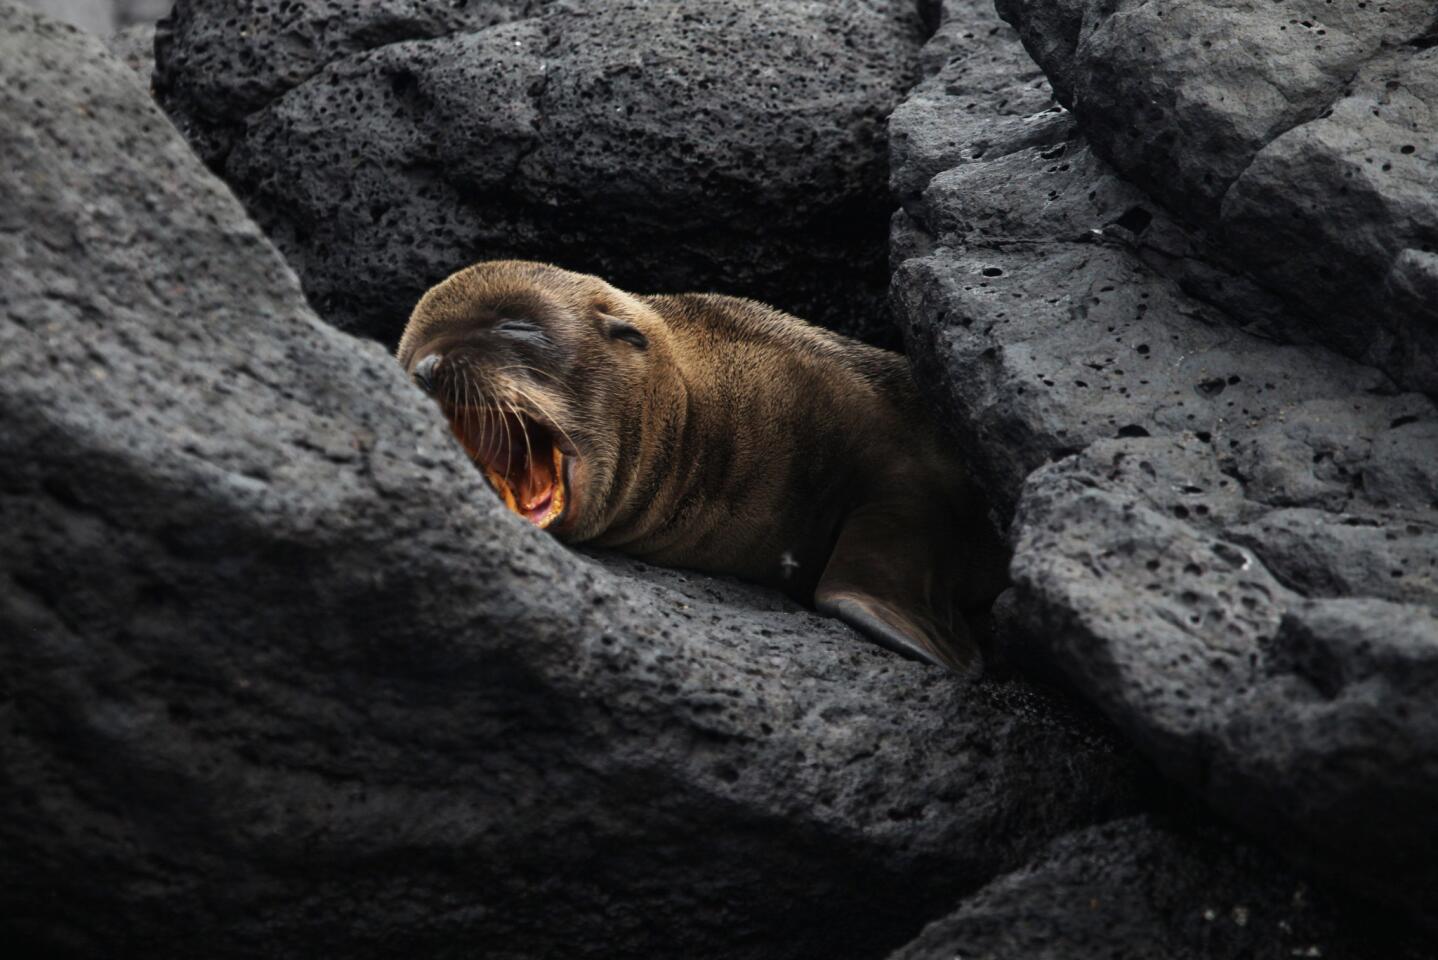 Baby seal nursery on Santa Fe Island in the Galápagos Islands.